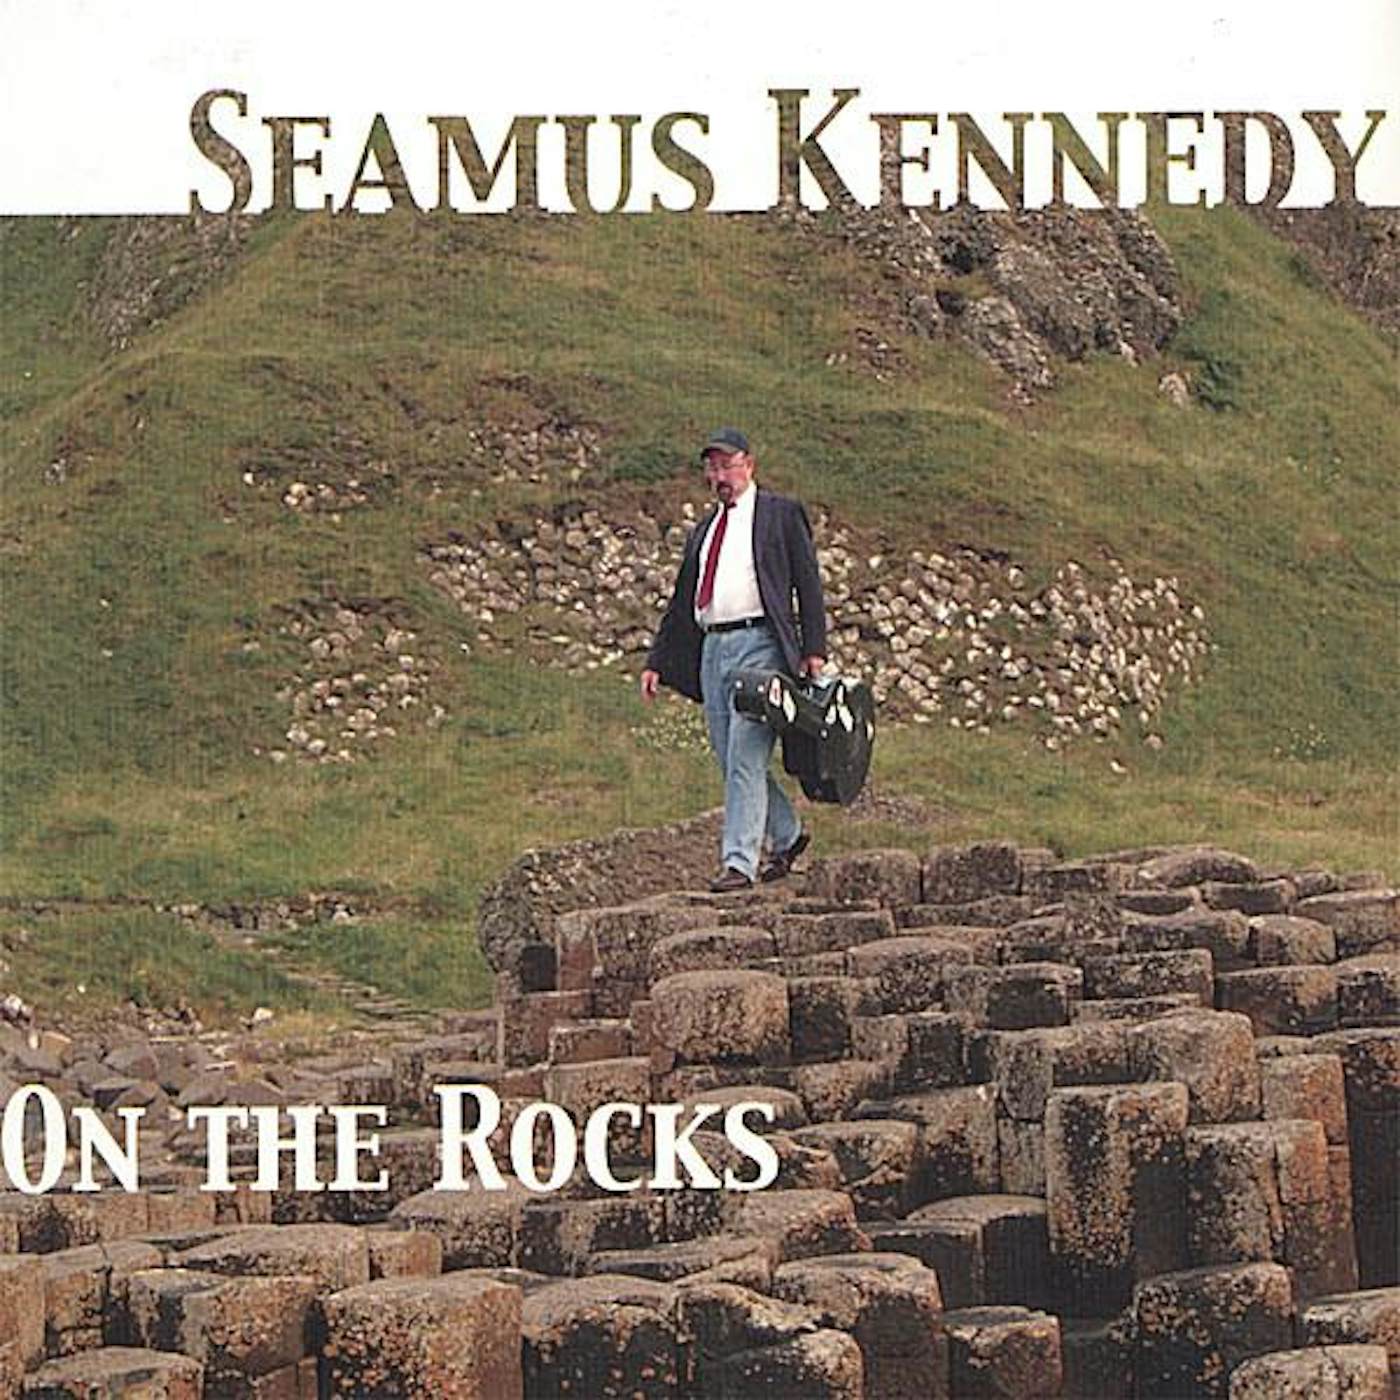 Seamus Kennedy ON THE ROCKS CD